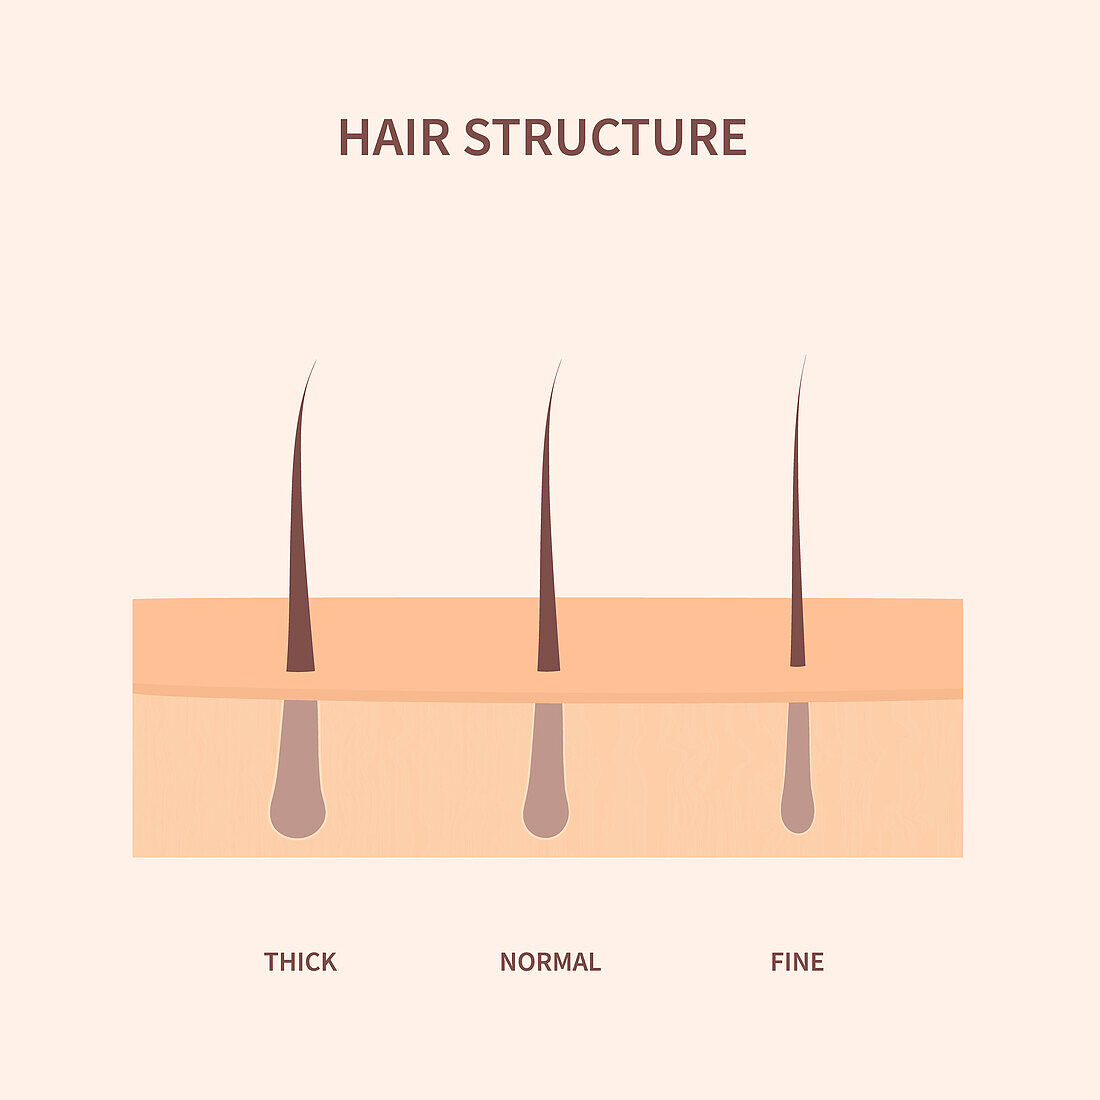 Human hair, conceptual illustration